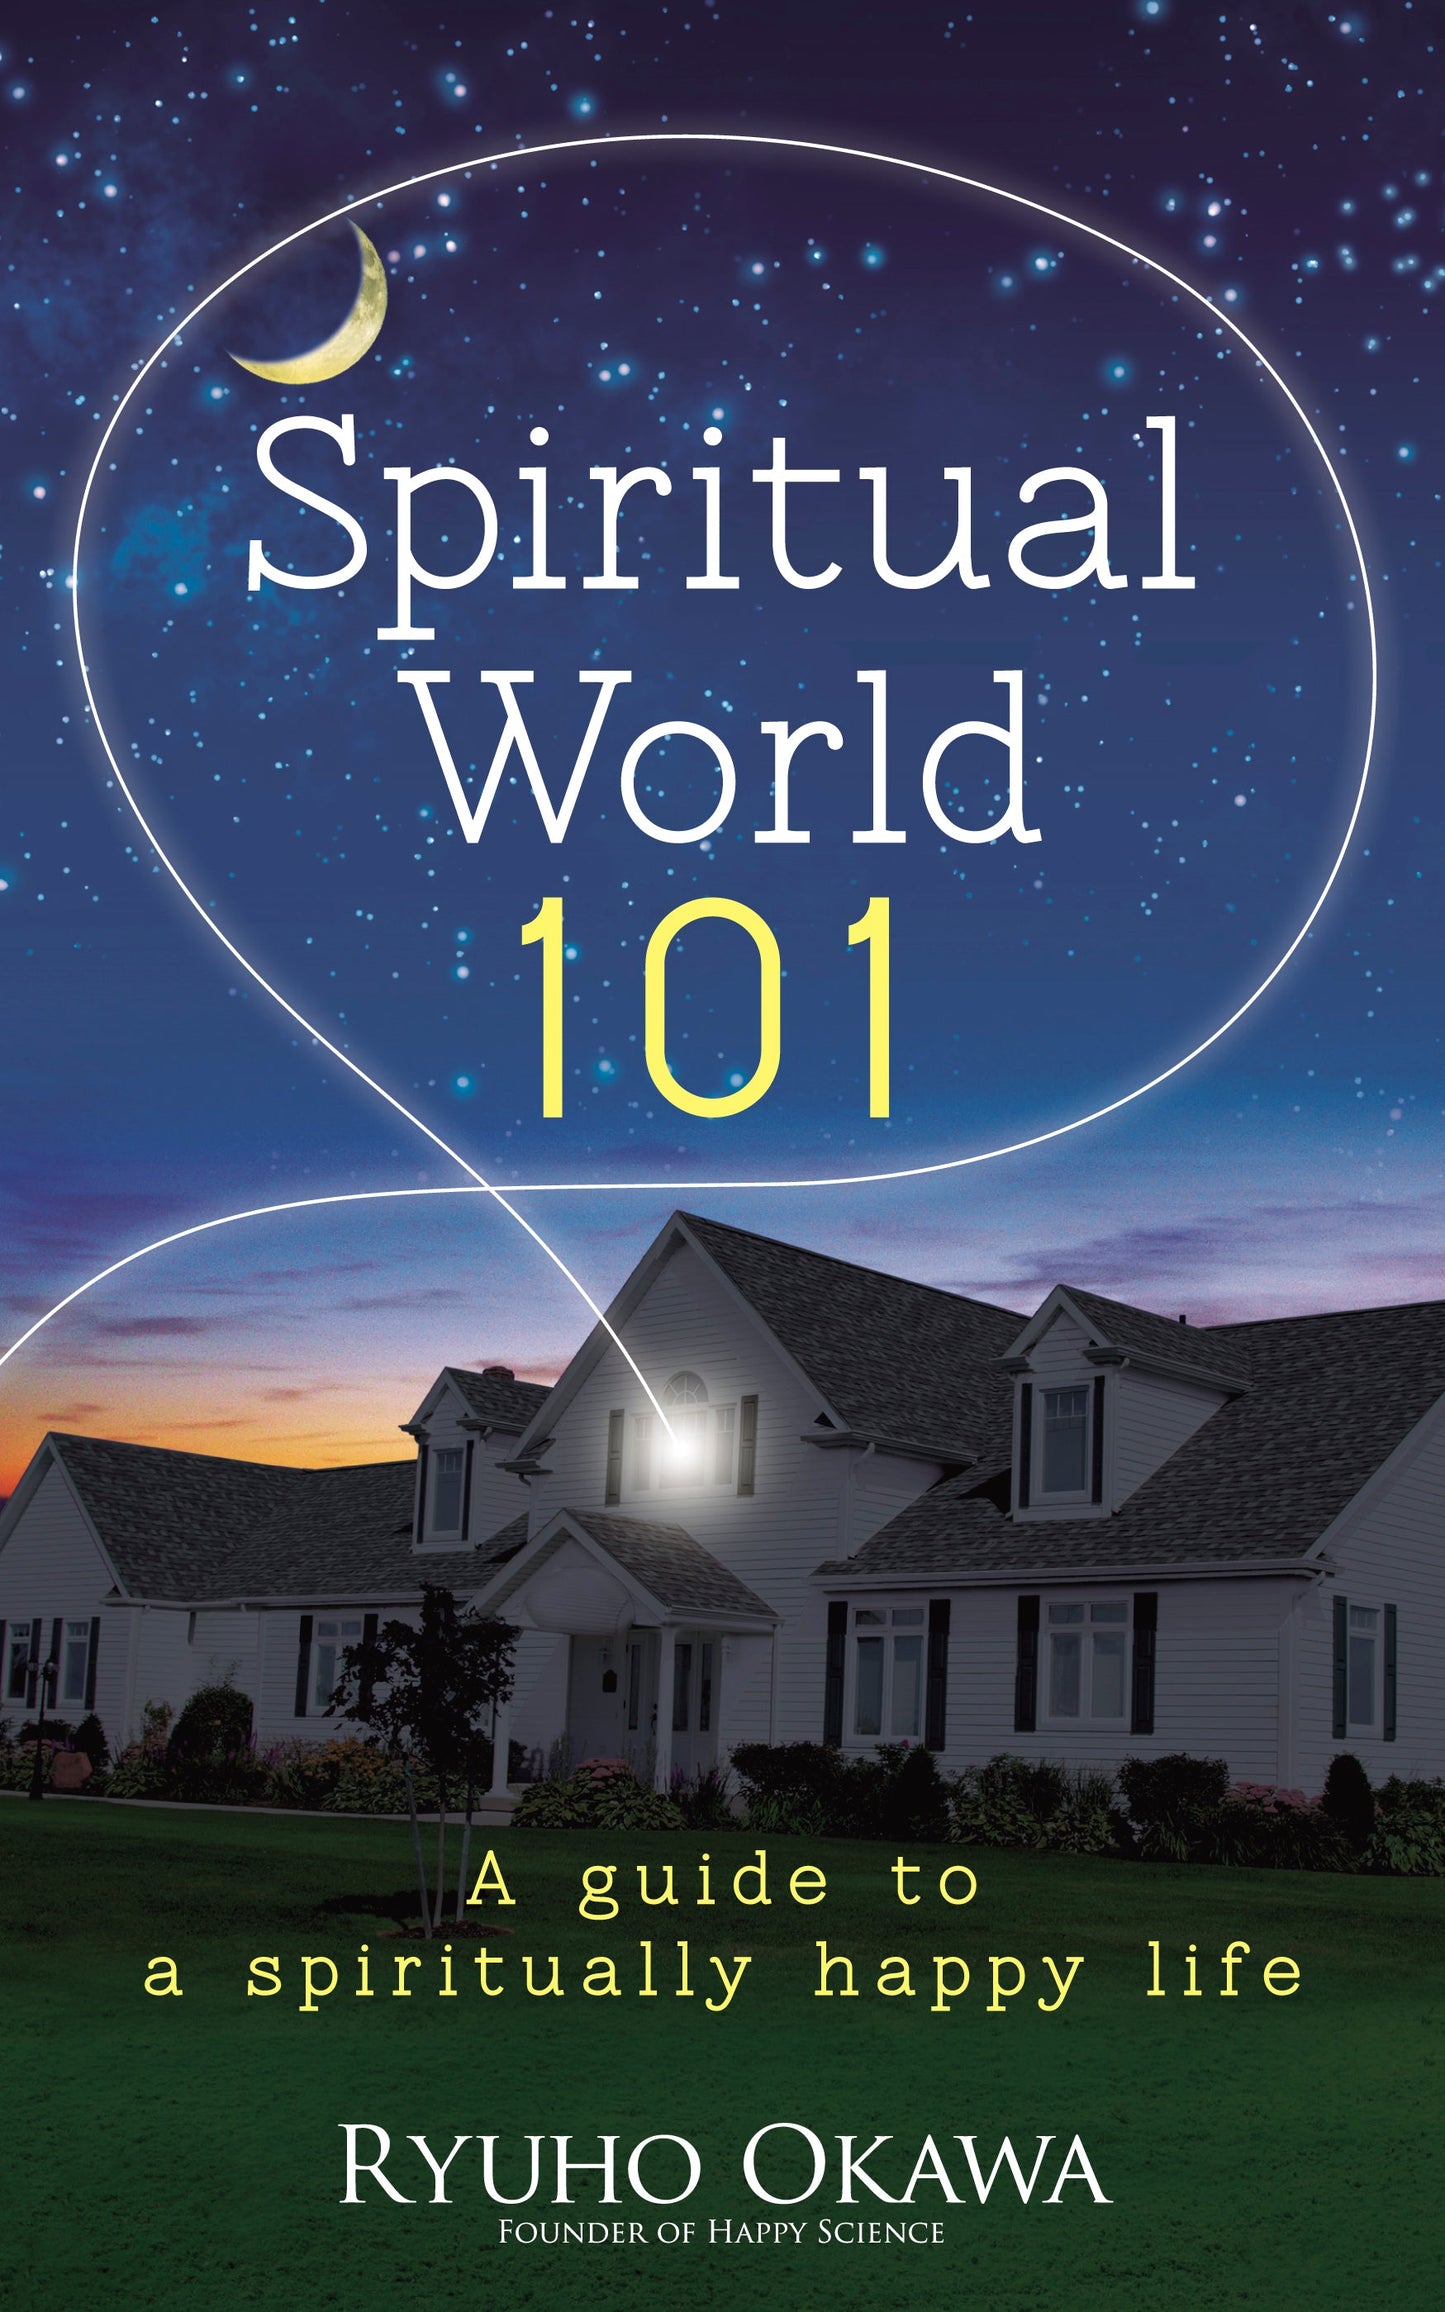 Spiritual World 101 -A guide to a spiritually happy life - IRH Press International